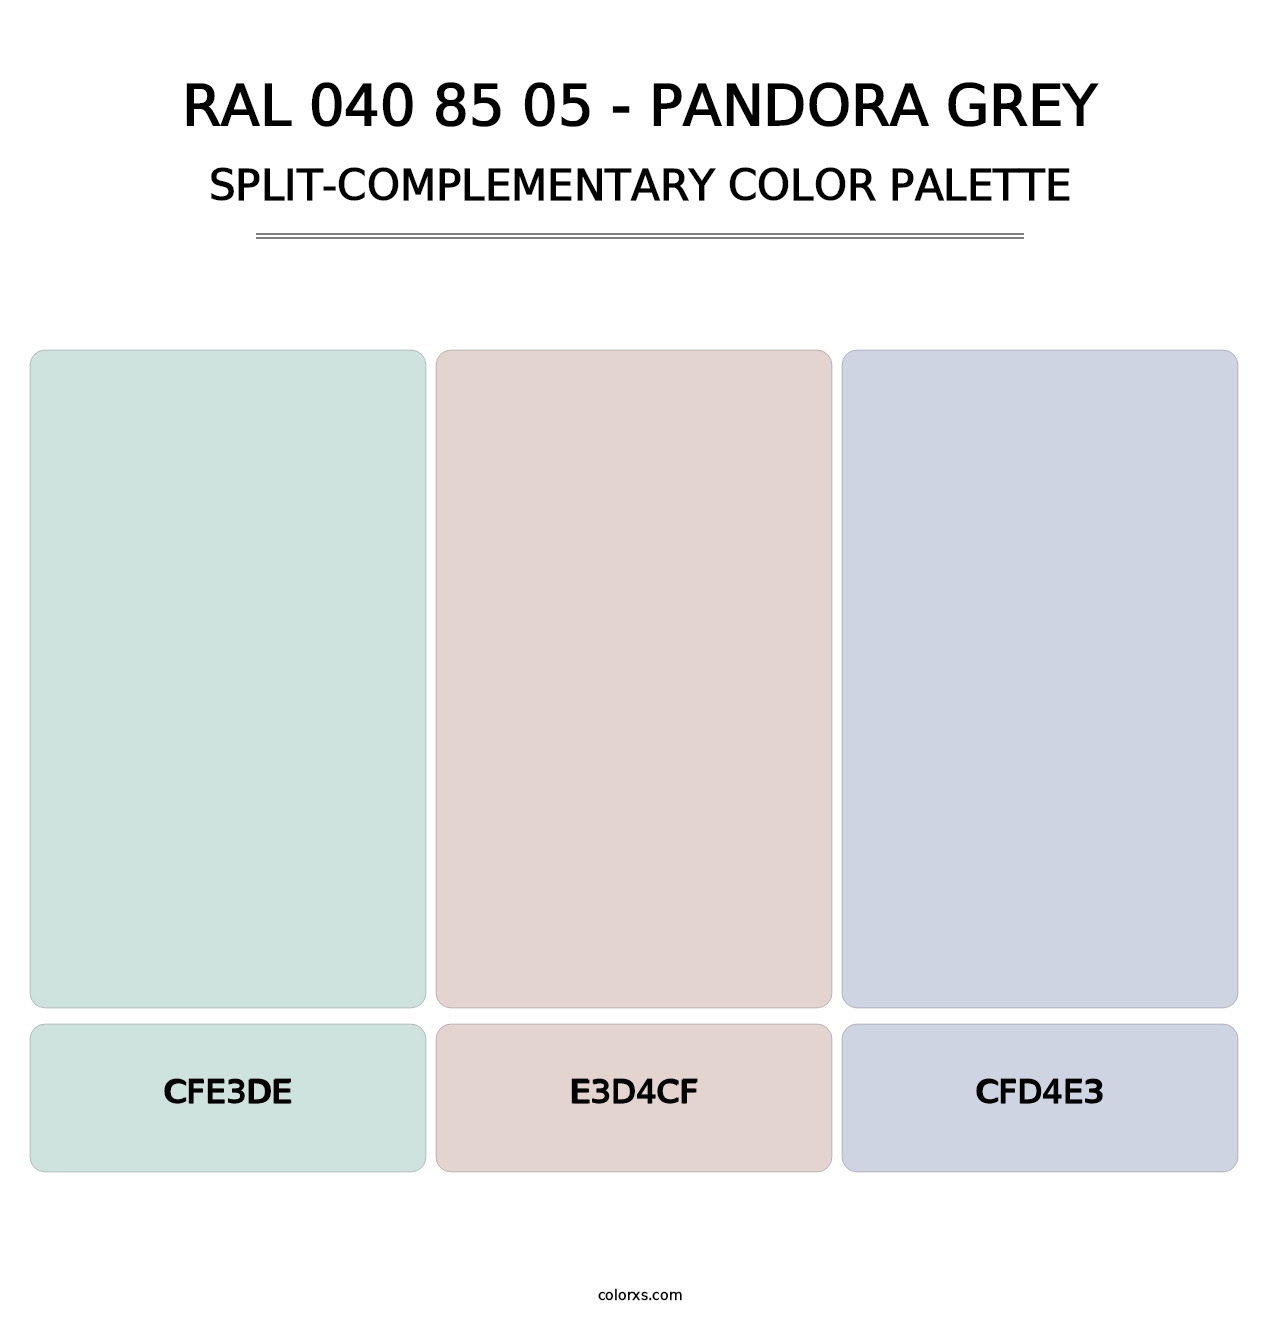 RAL 040 85 05 - Pandora Grey - Split-Complementary Color Palette